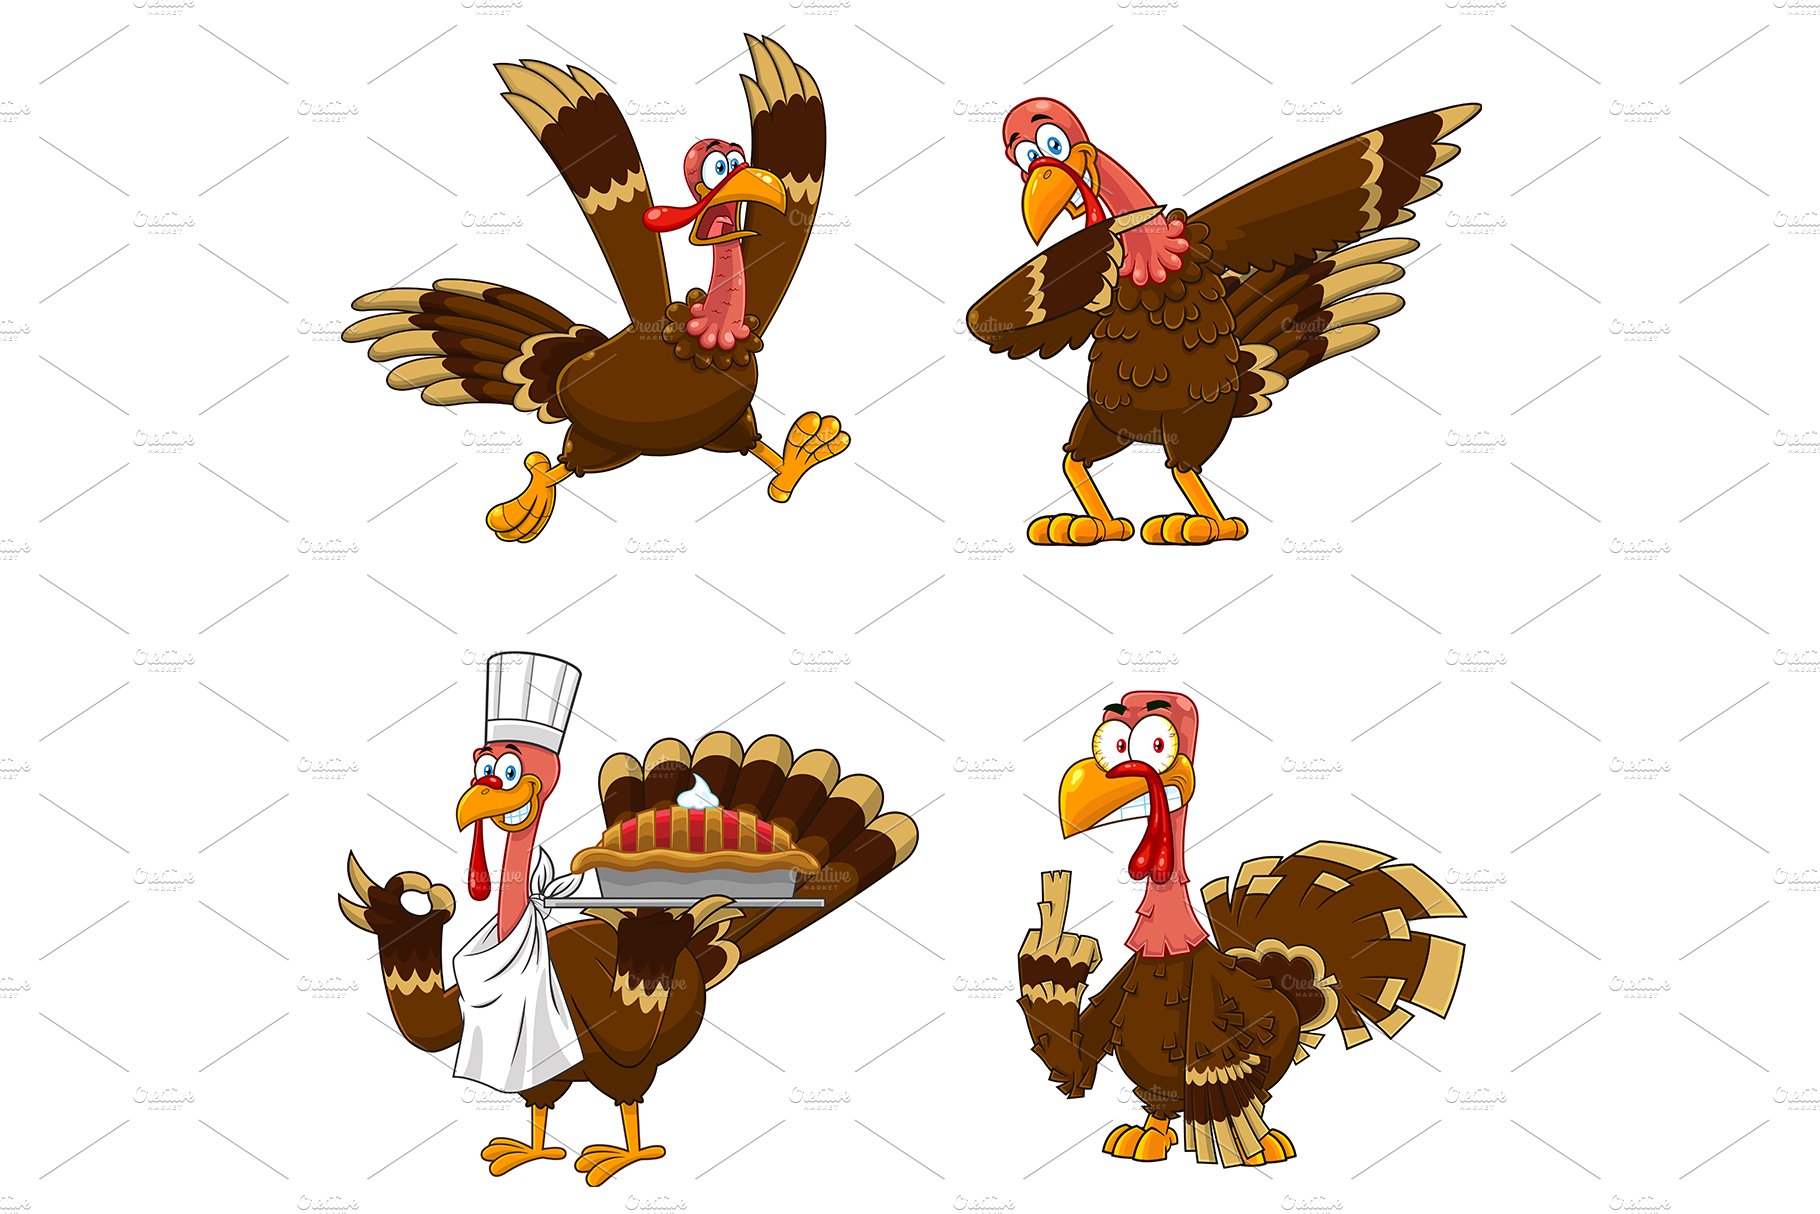 Turkey Bird Character Set 5 cover image.